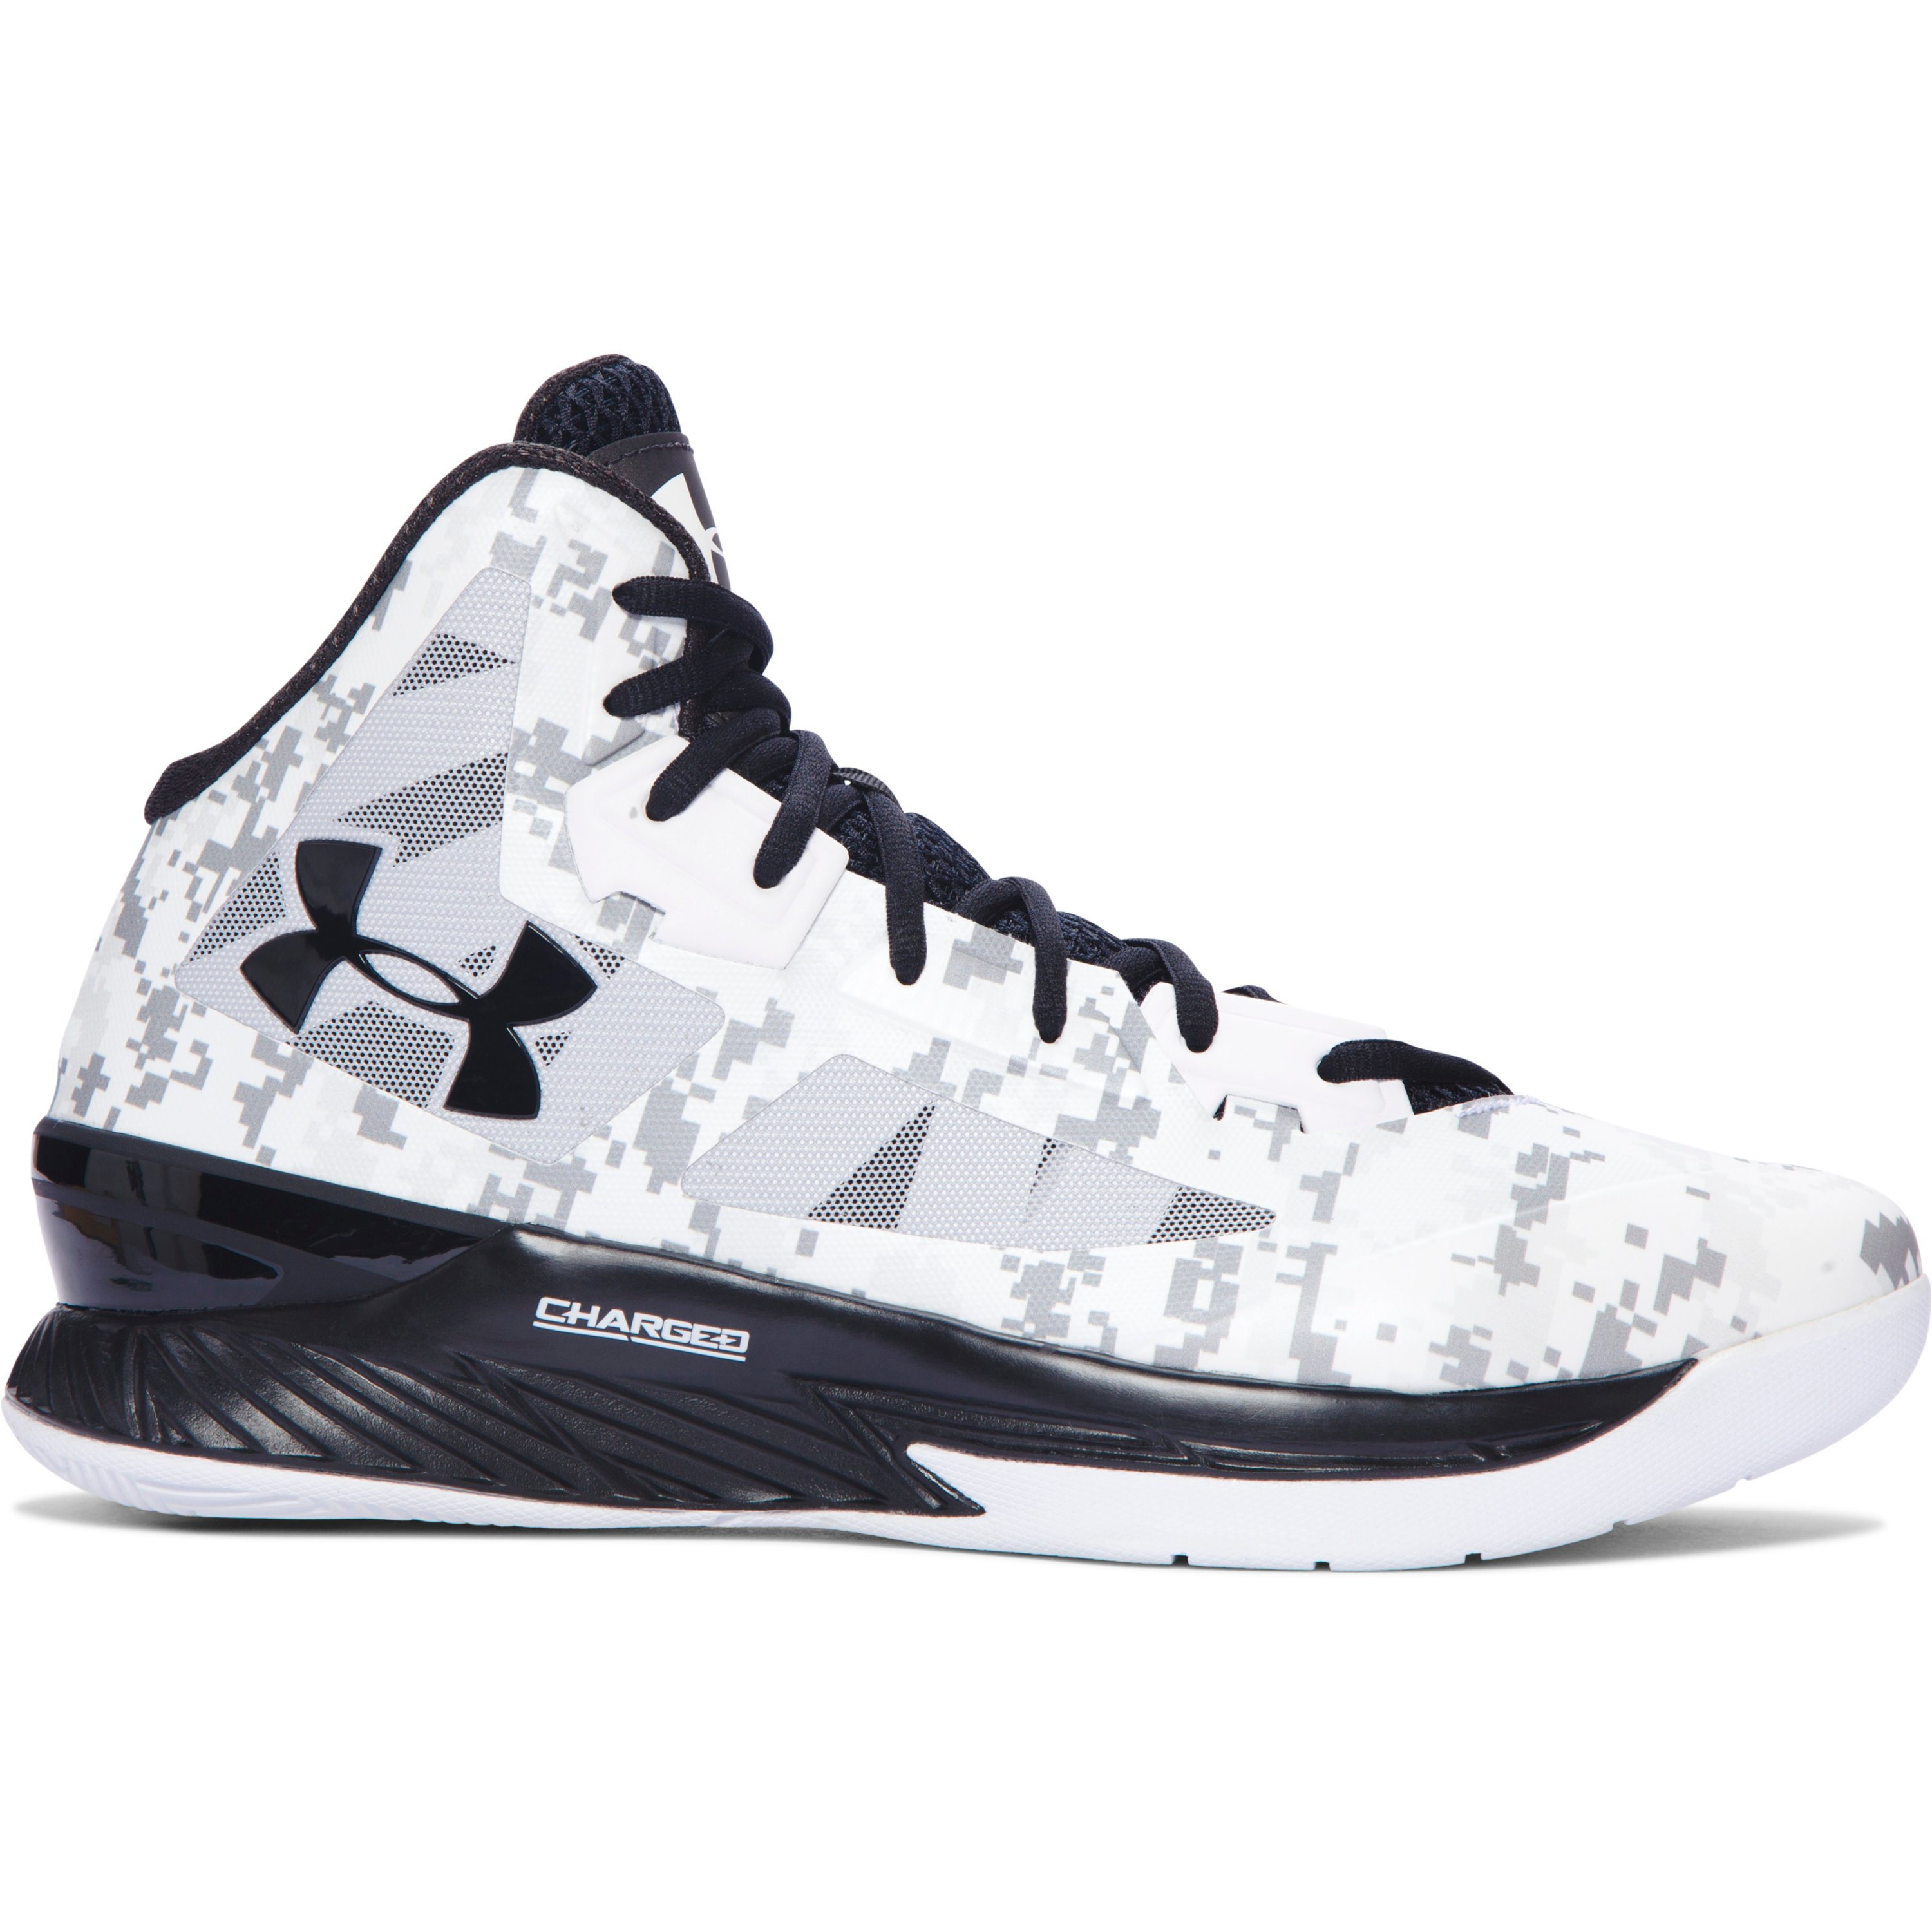 Under Armour Men's Ua Lightning 3 Basketball Shoes in White/Black ...